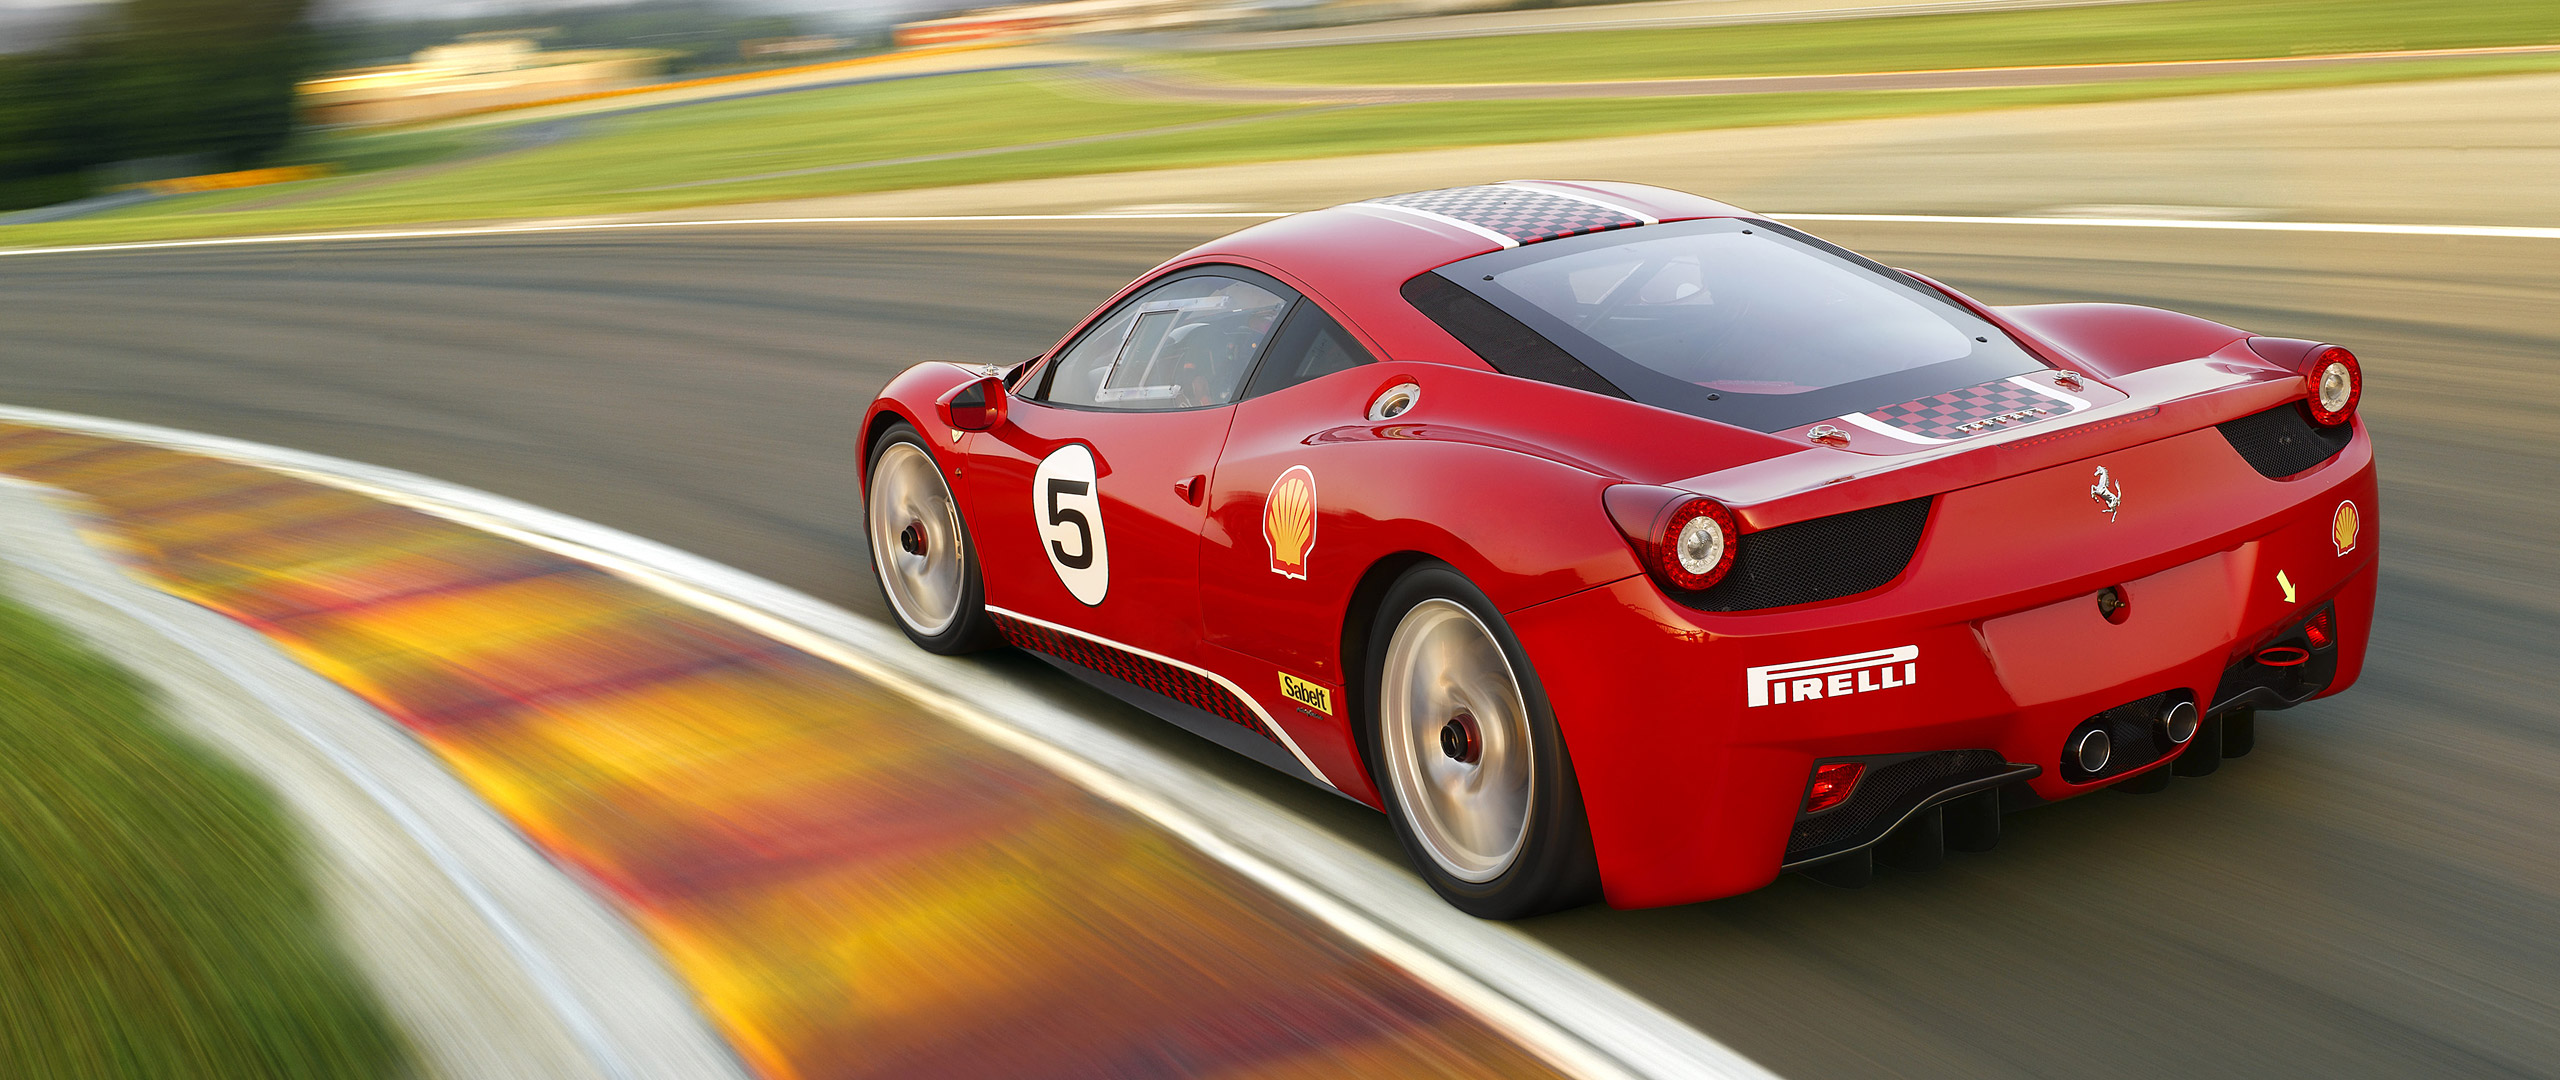  2011 Ferrari 458 Challenge Wallpaper.